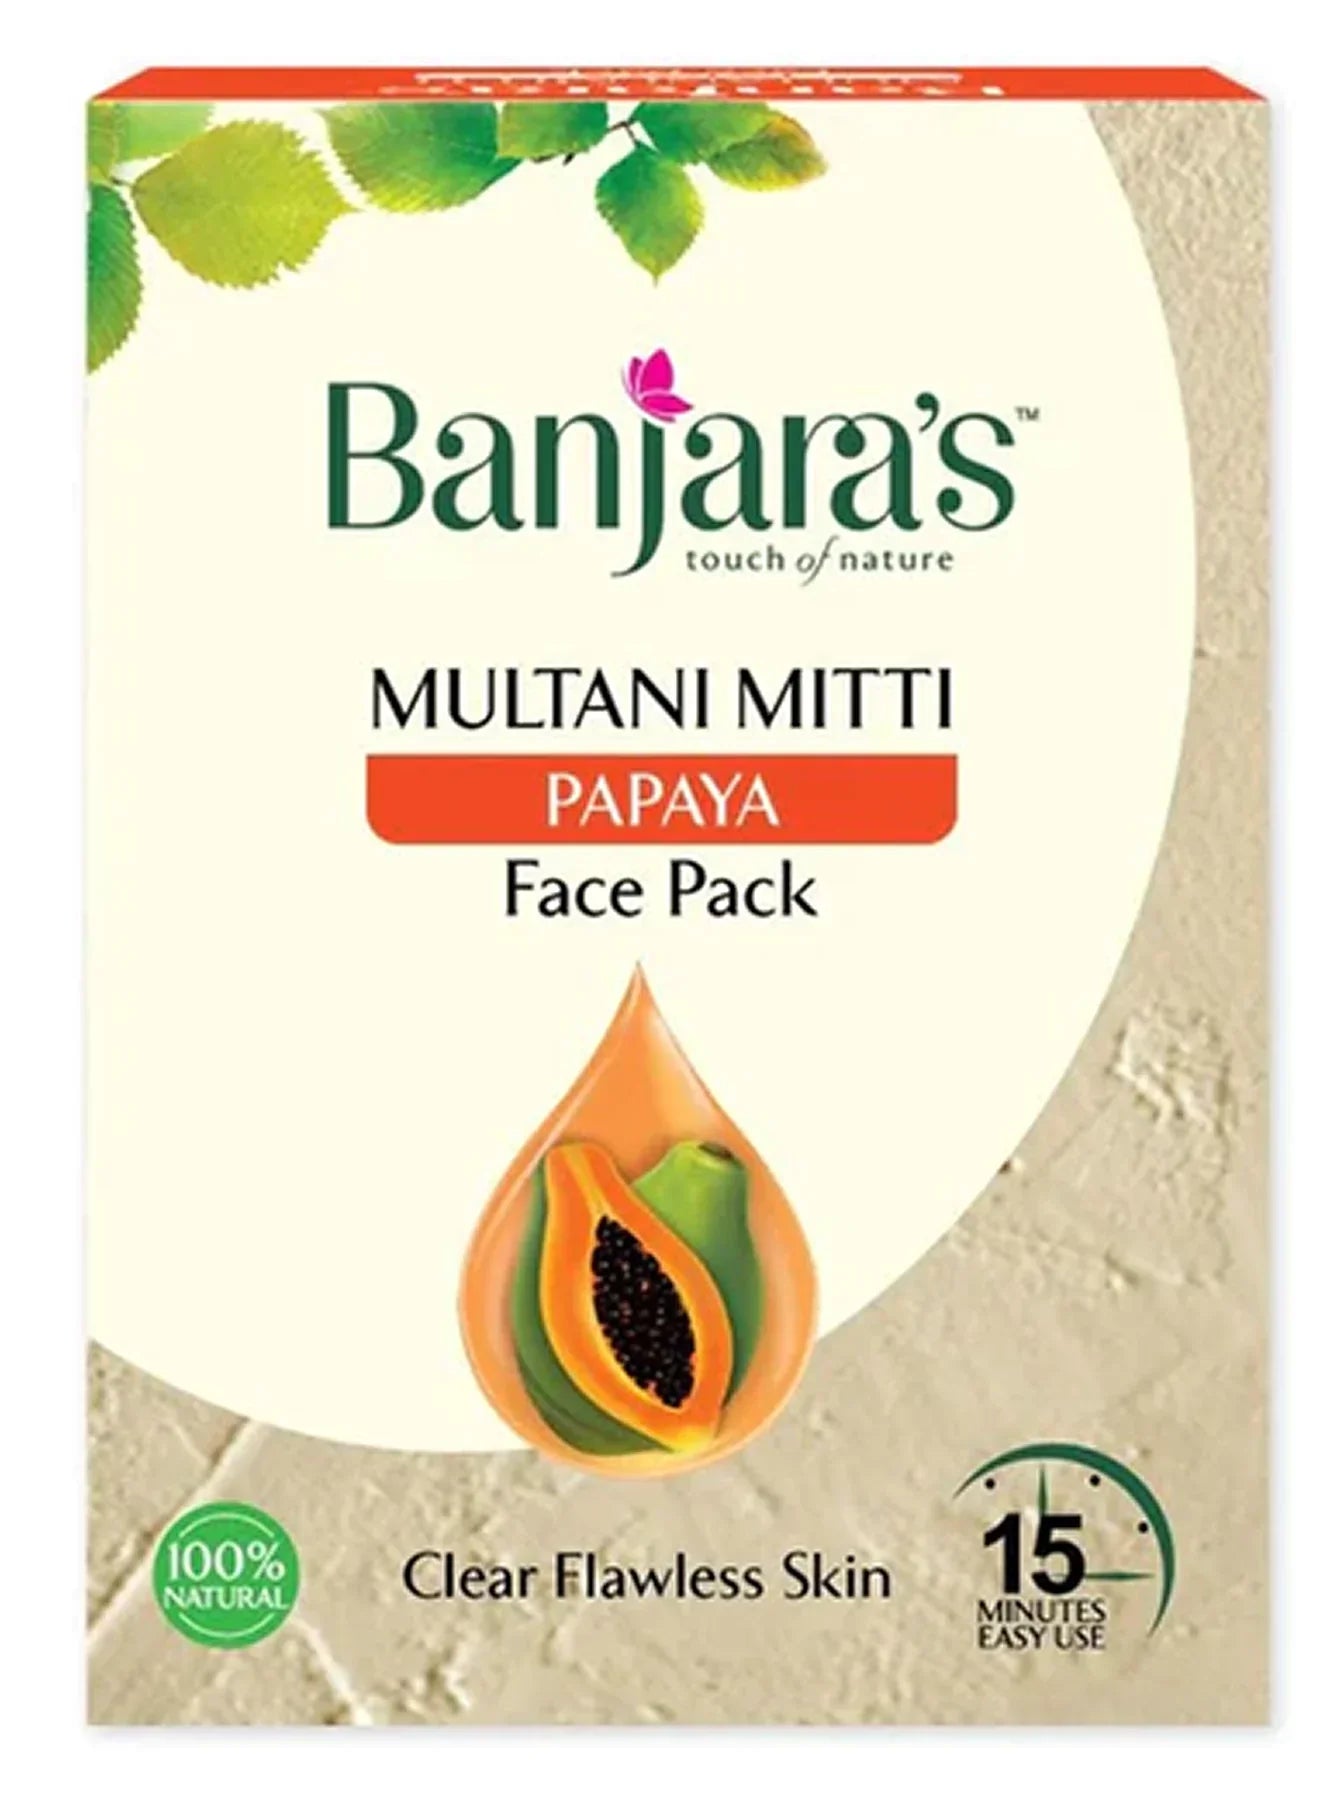 Banjaras Multani Mitti Papaya Face Pack 100g Value Pack of 12 